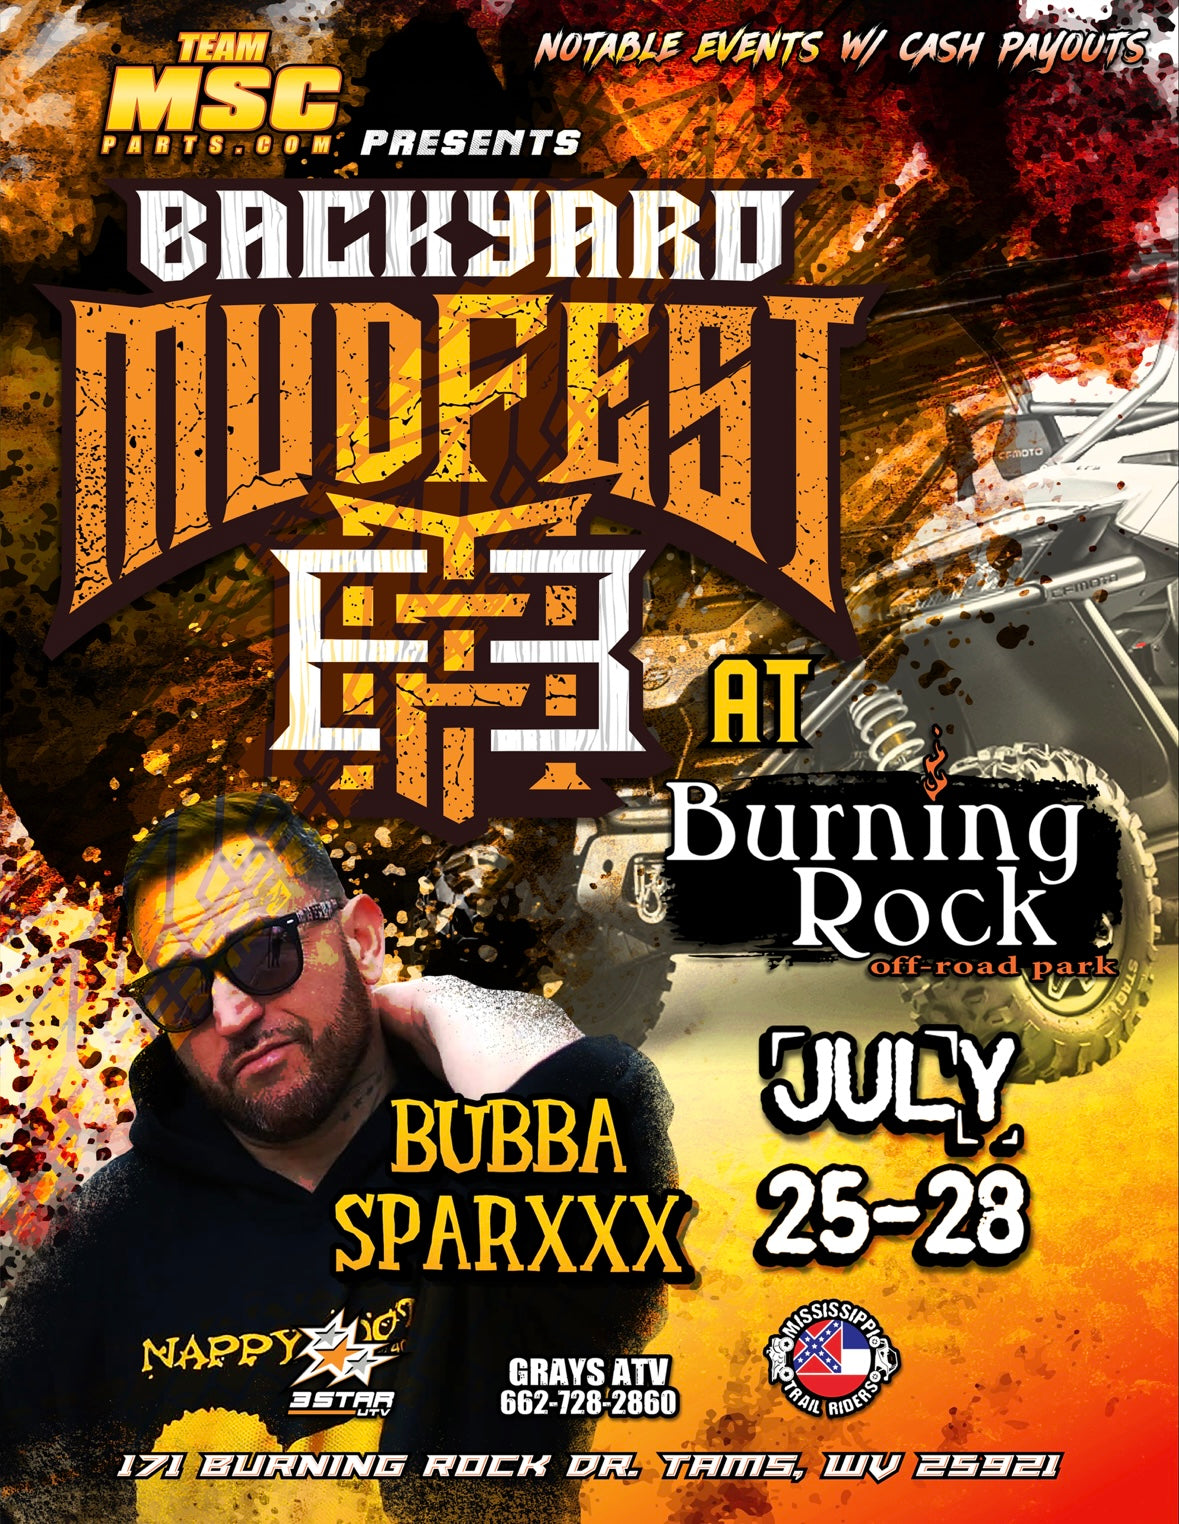 Backyard Mud Fest at Burning Rock Off Road Park